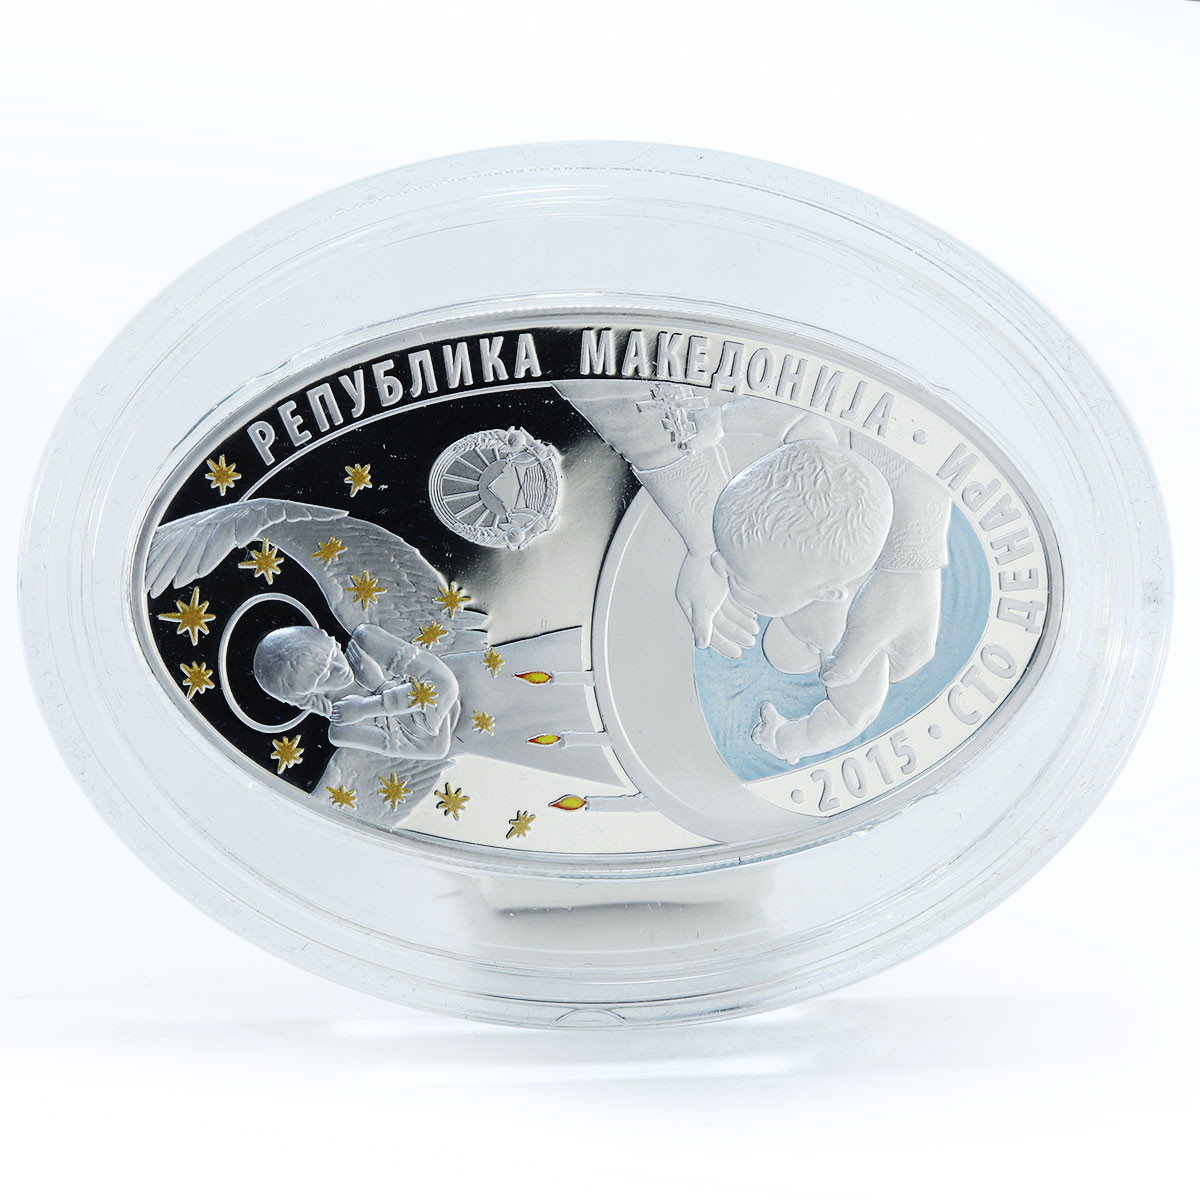 Macedonia 100 denari Angels Day Dmitry proof silver coin 2015